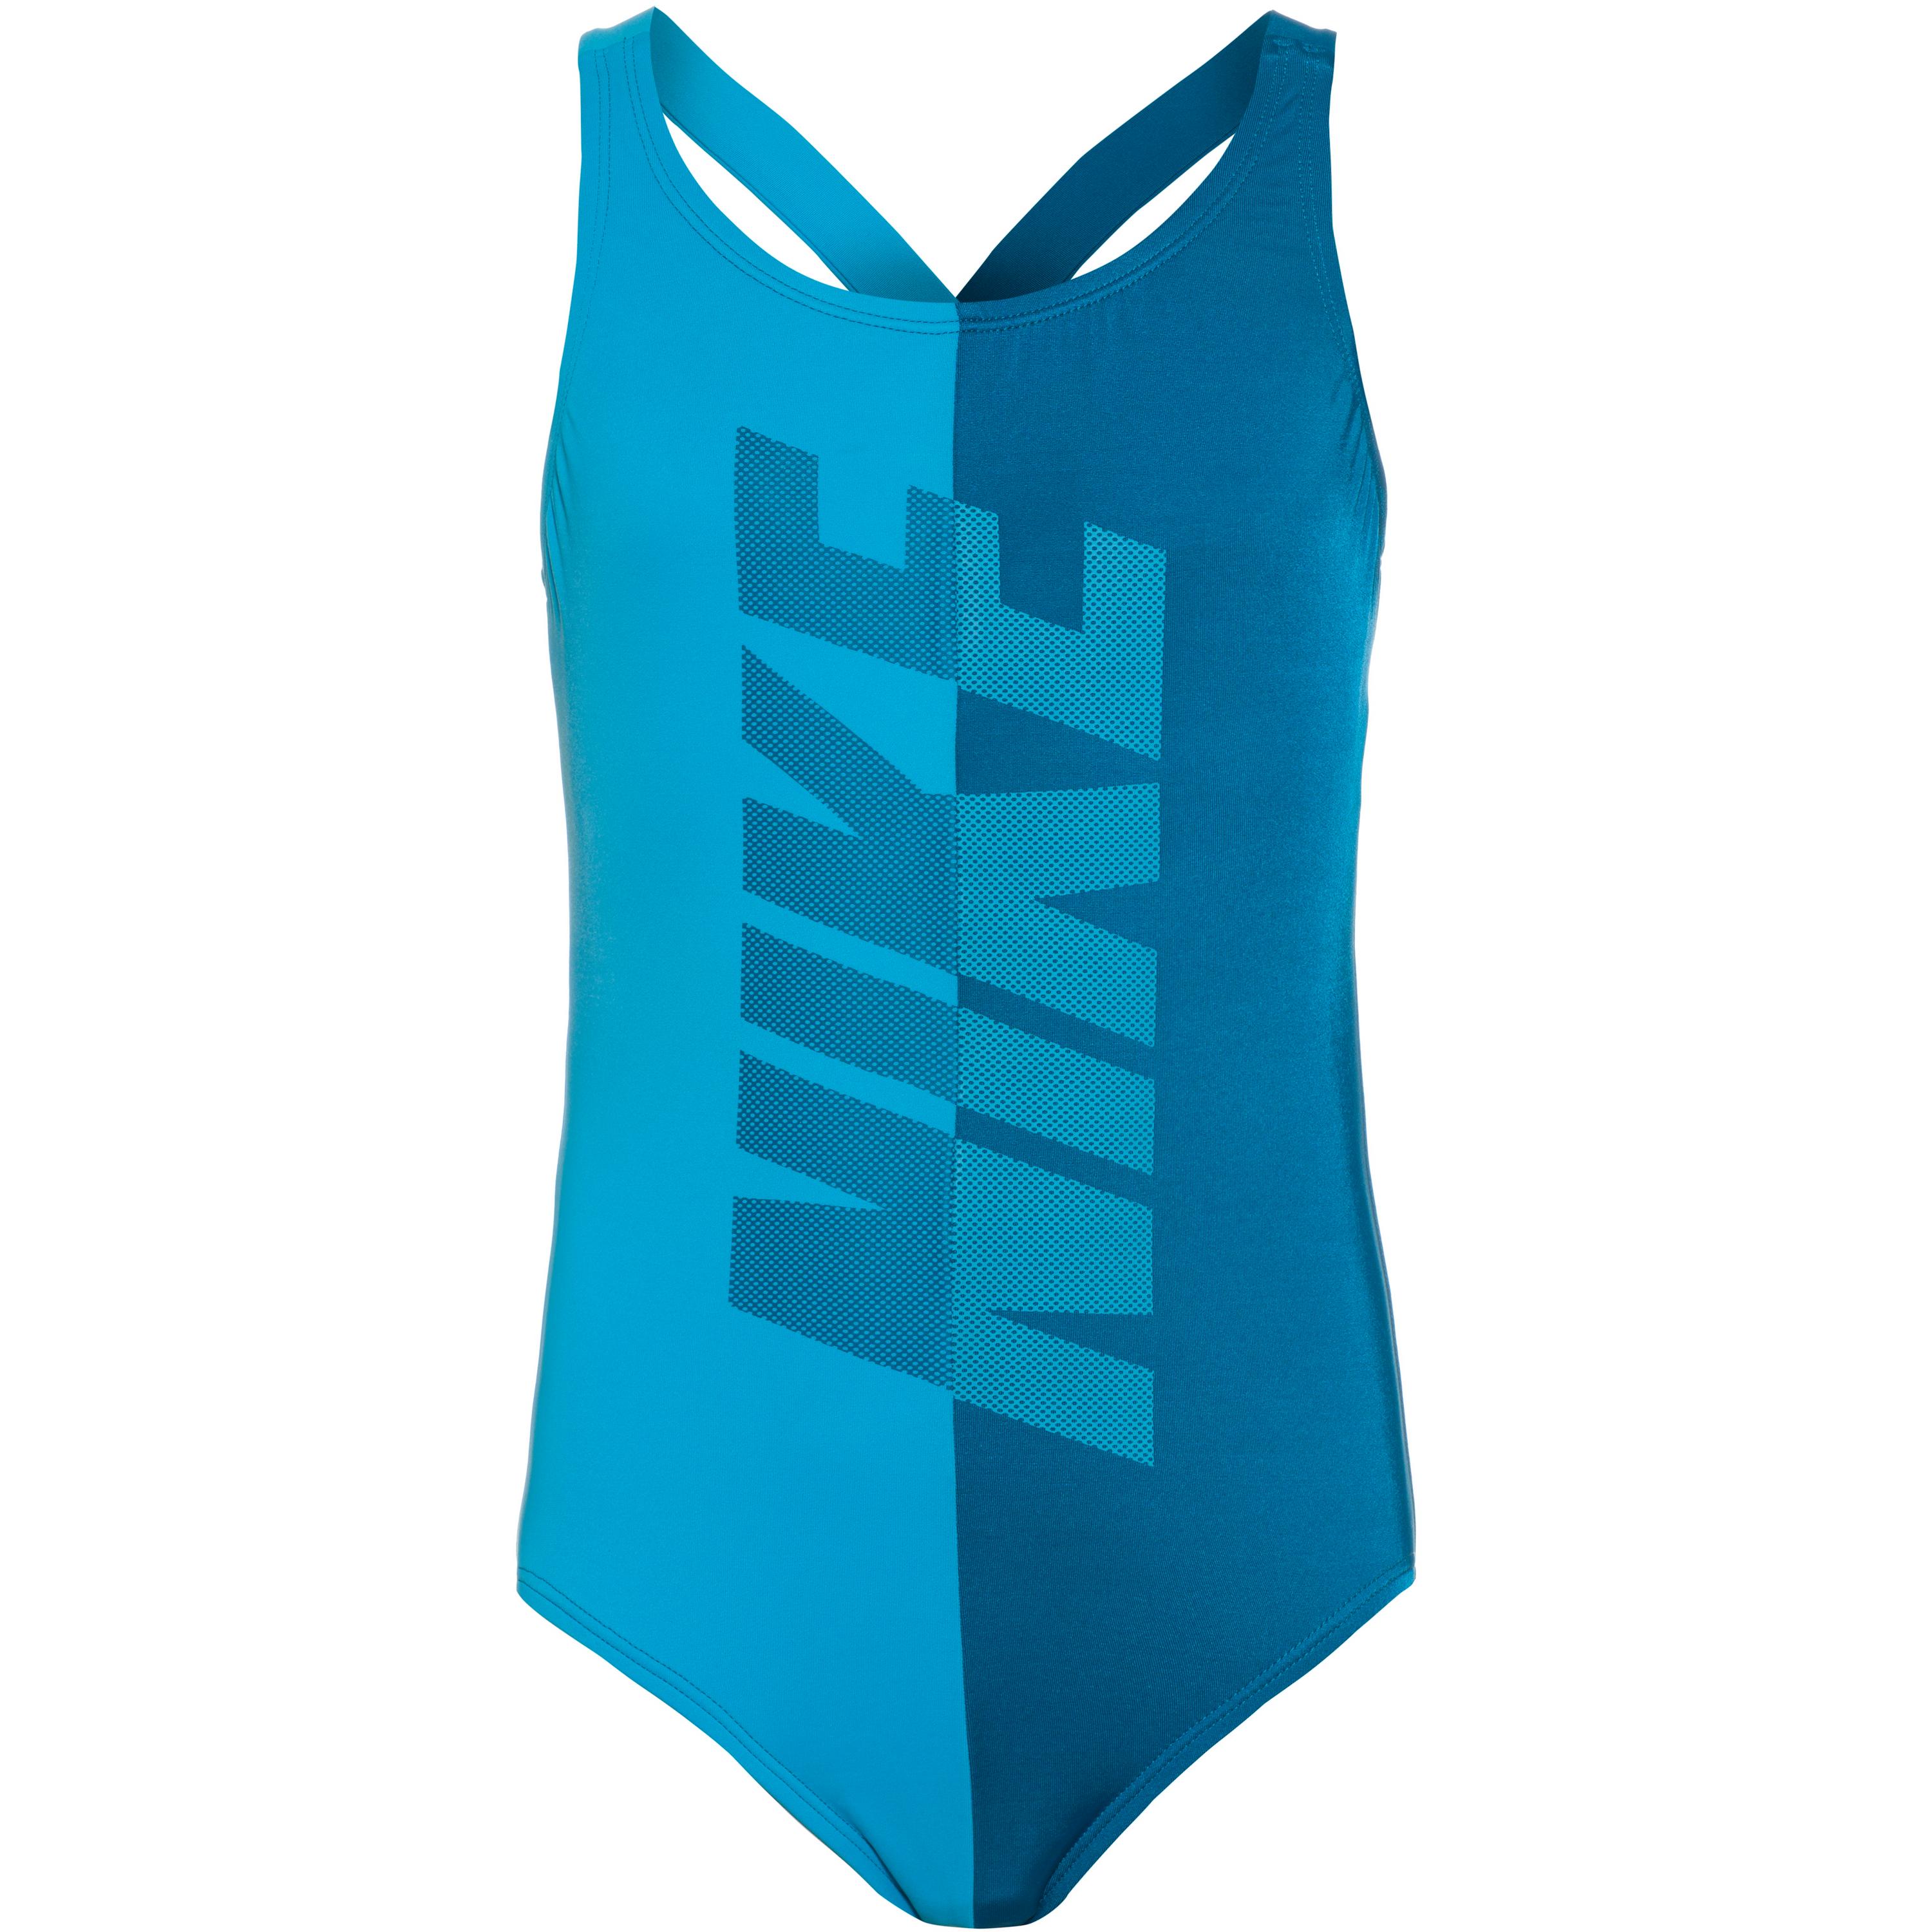 Nike Swim Sportbademode in Blau 